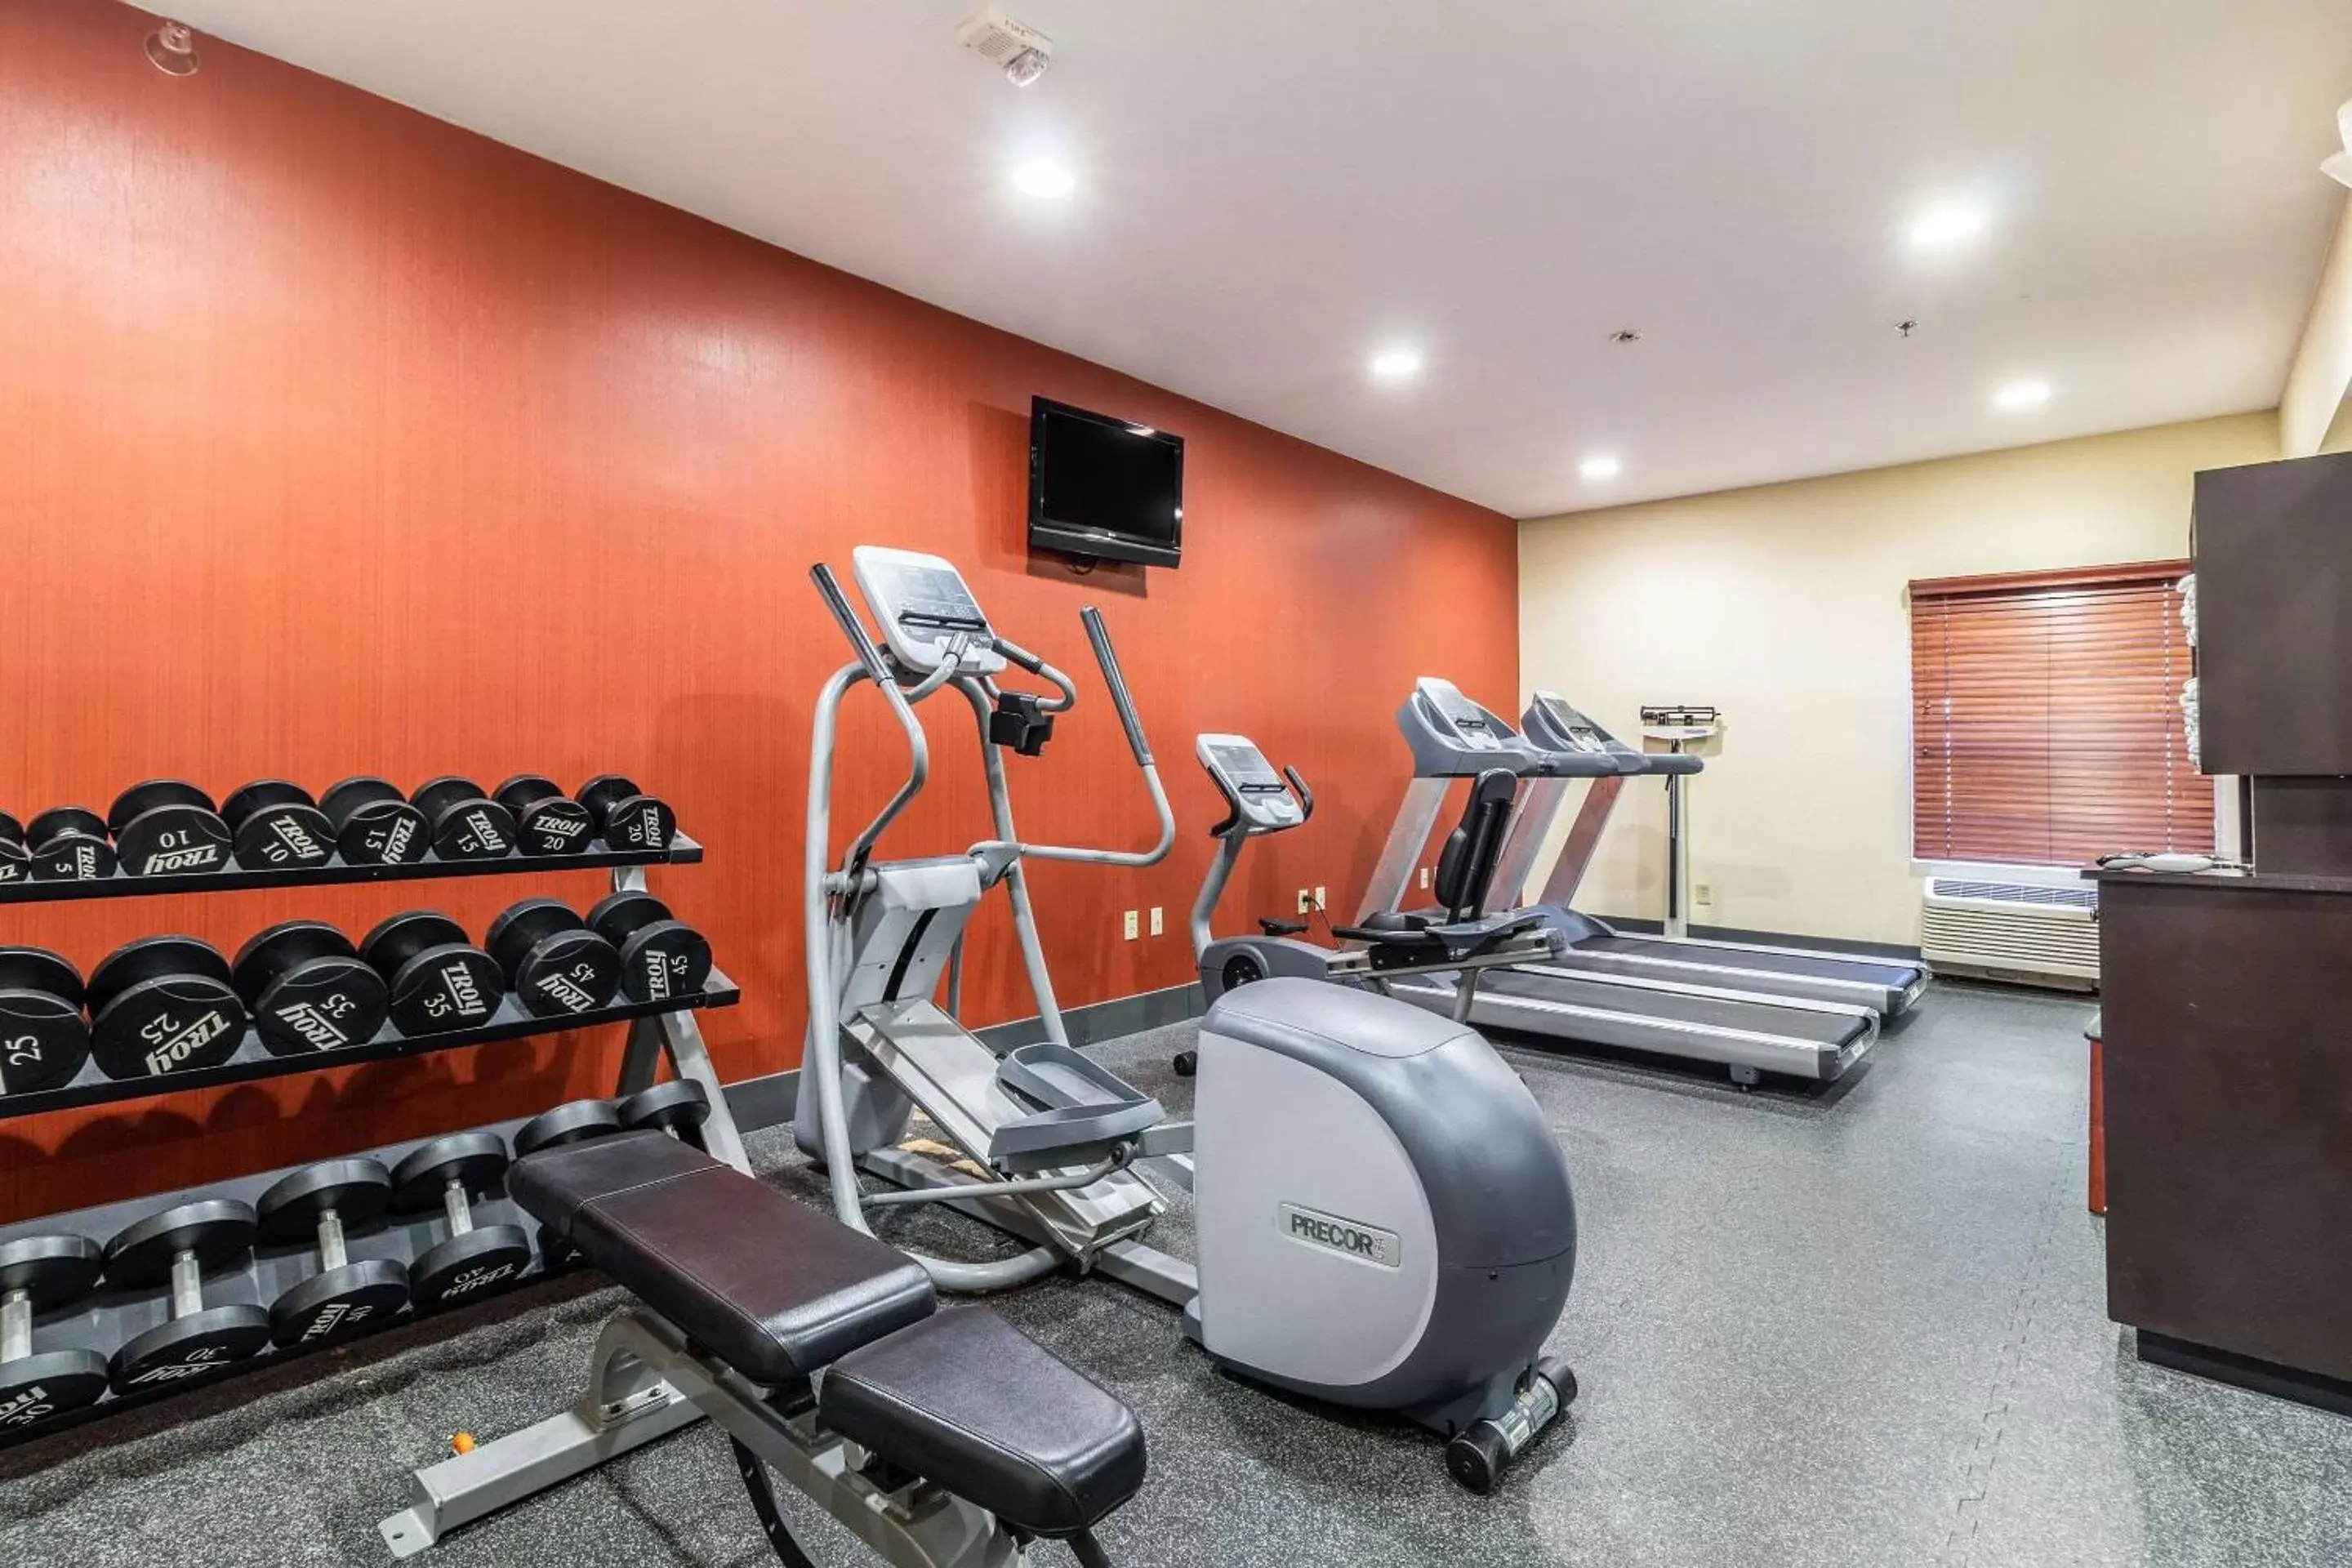 Fitness centre/facilities, Fitness Center/Facilities in Quality Inn Texas City I-45